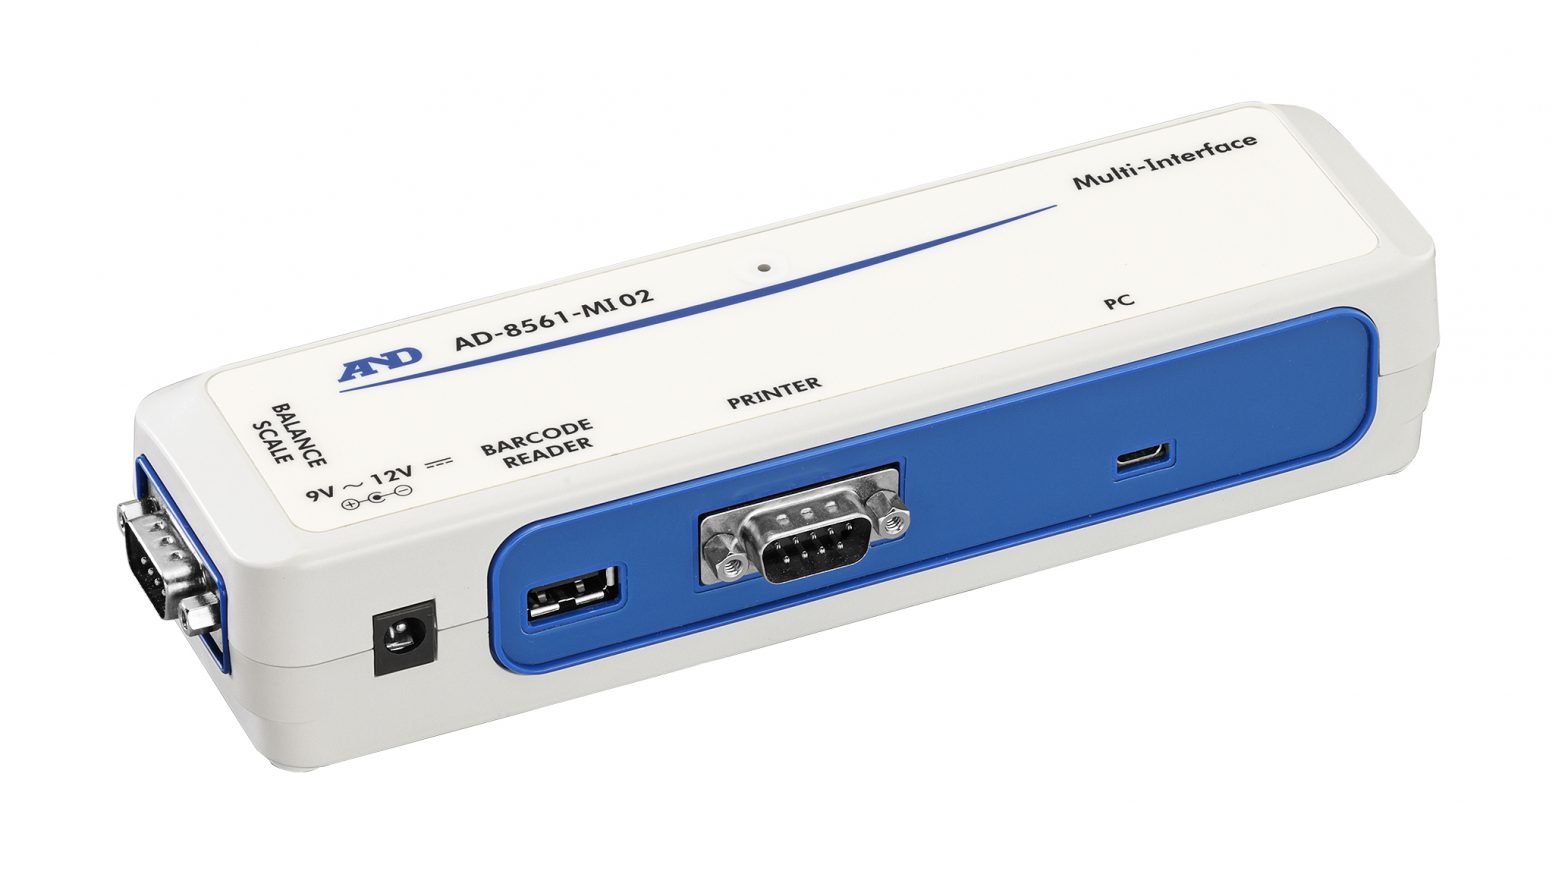 AD-8561-MI02 Multi-Interface Inc. USB